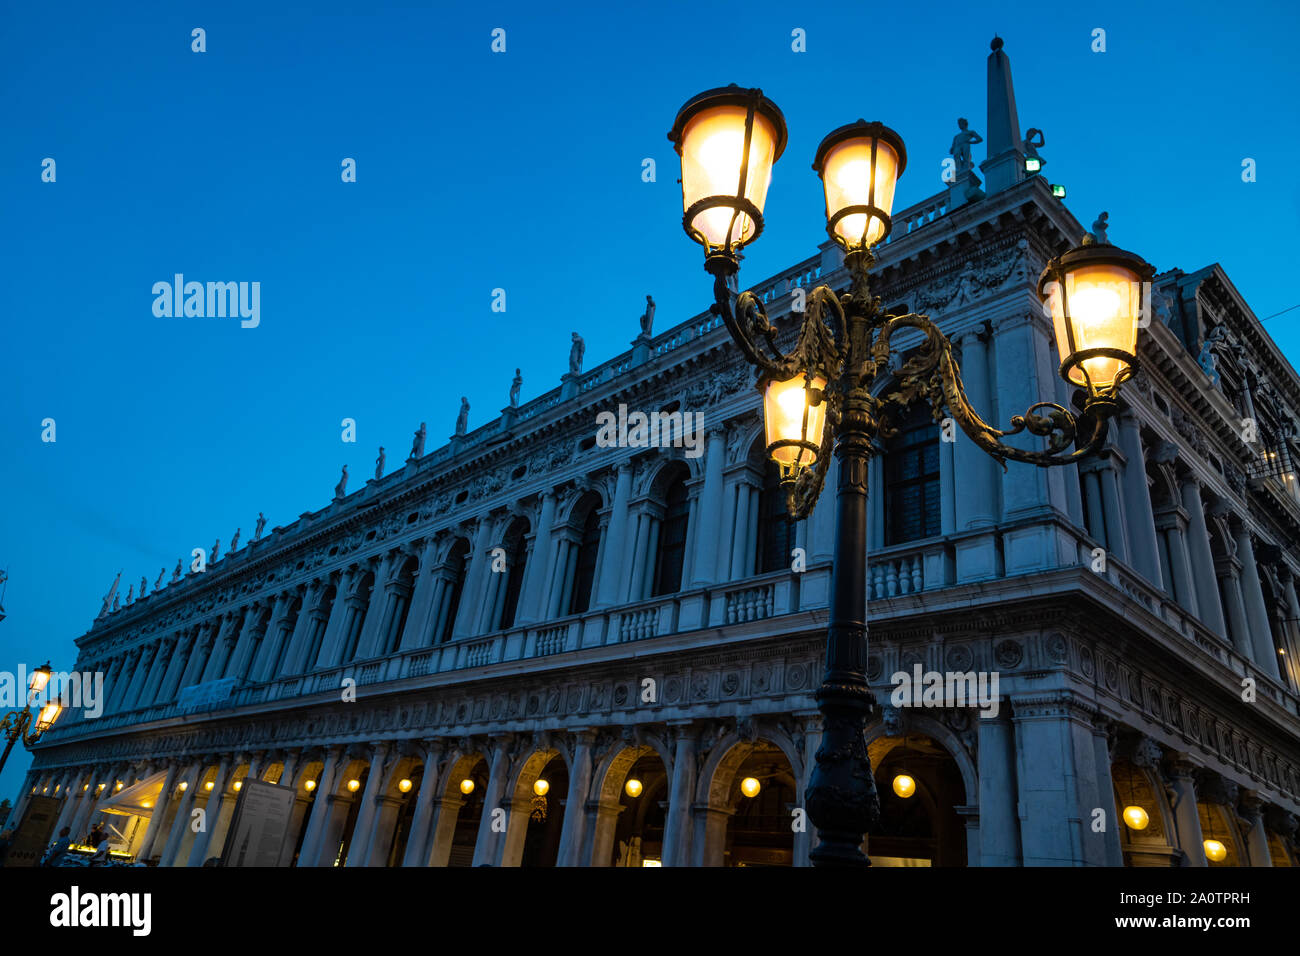 Ornate lamp posts at dusk, St Mark's square, Venice, Italy Stock Photo